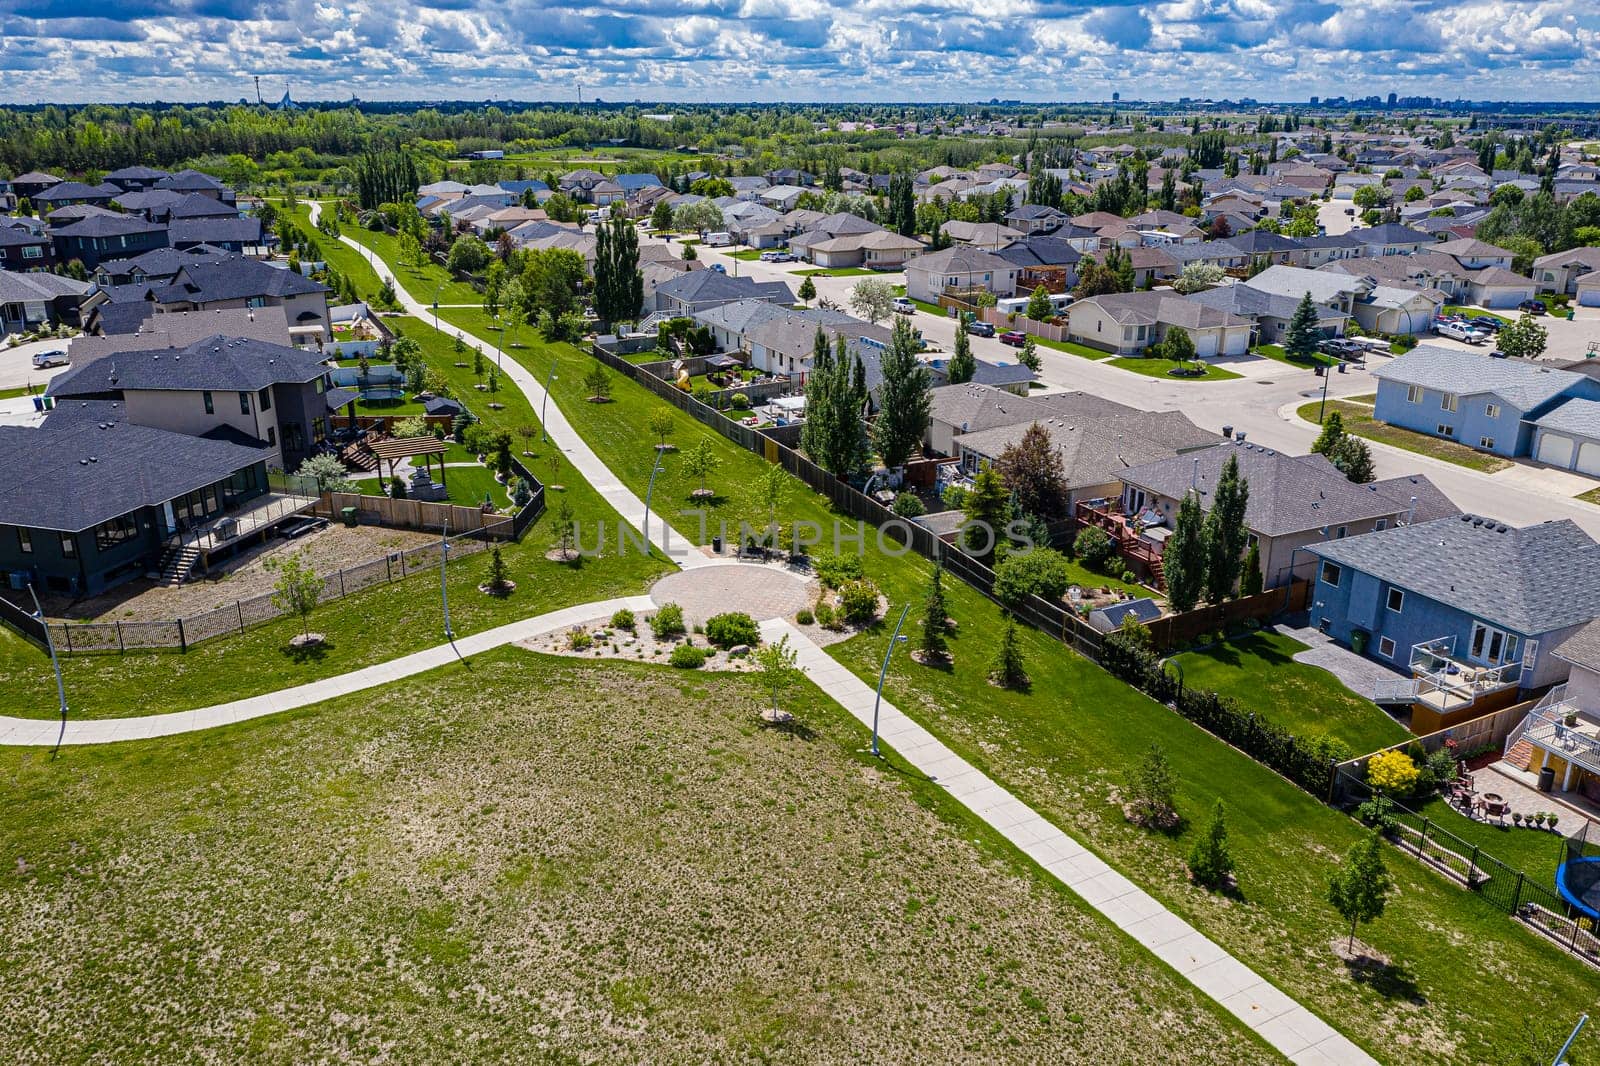 Cannam Park is located in the Evergreen neighborhood of Saskatoon.